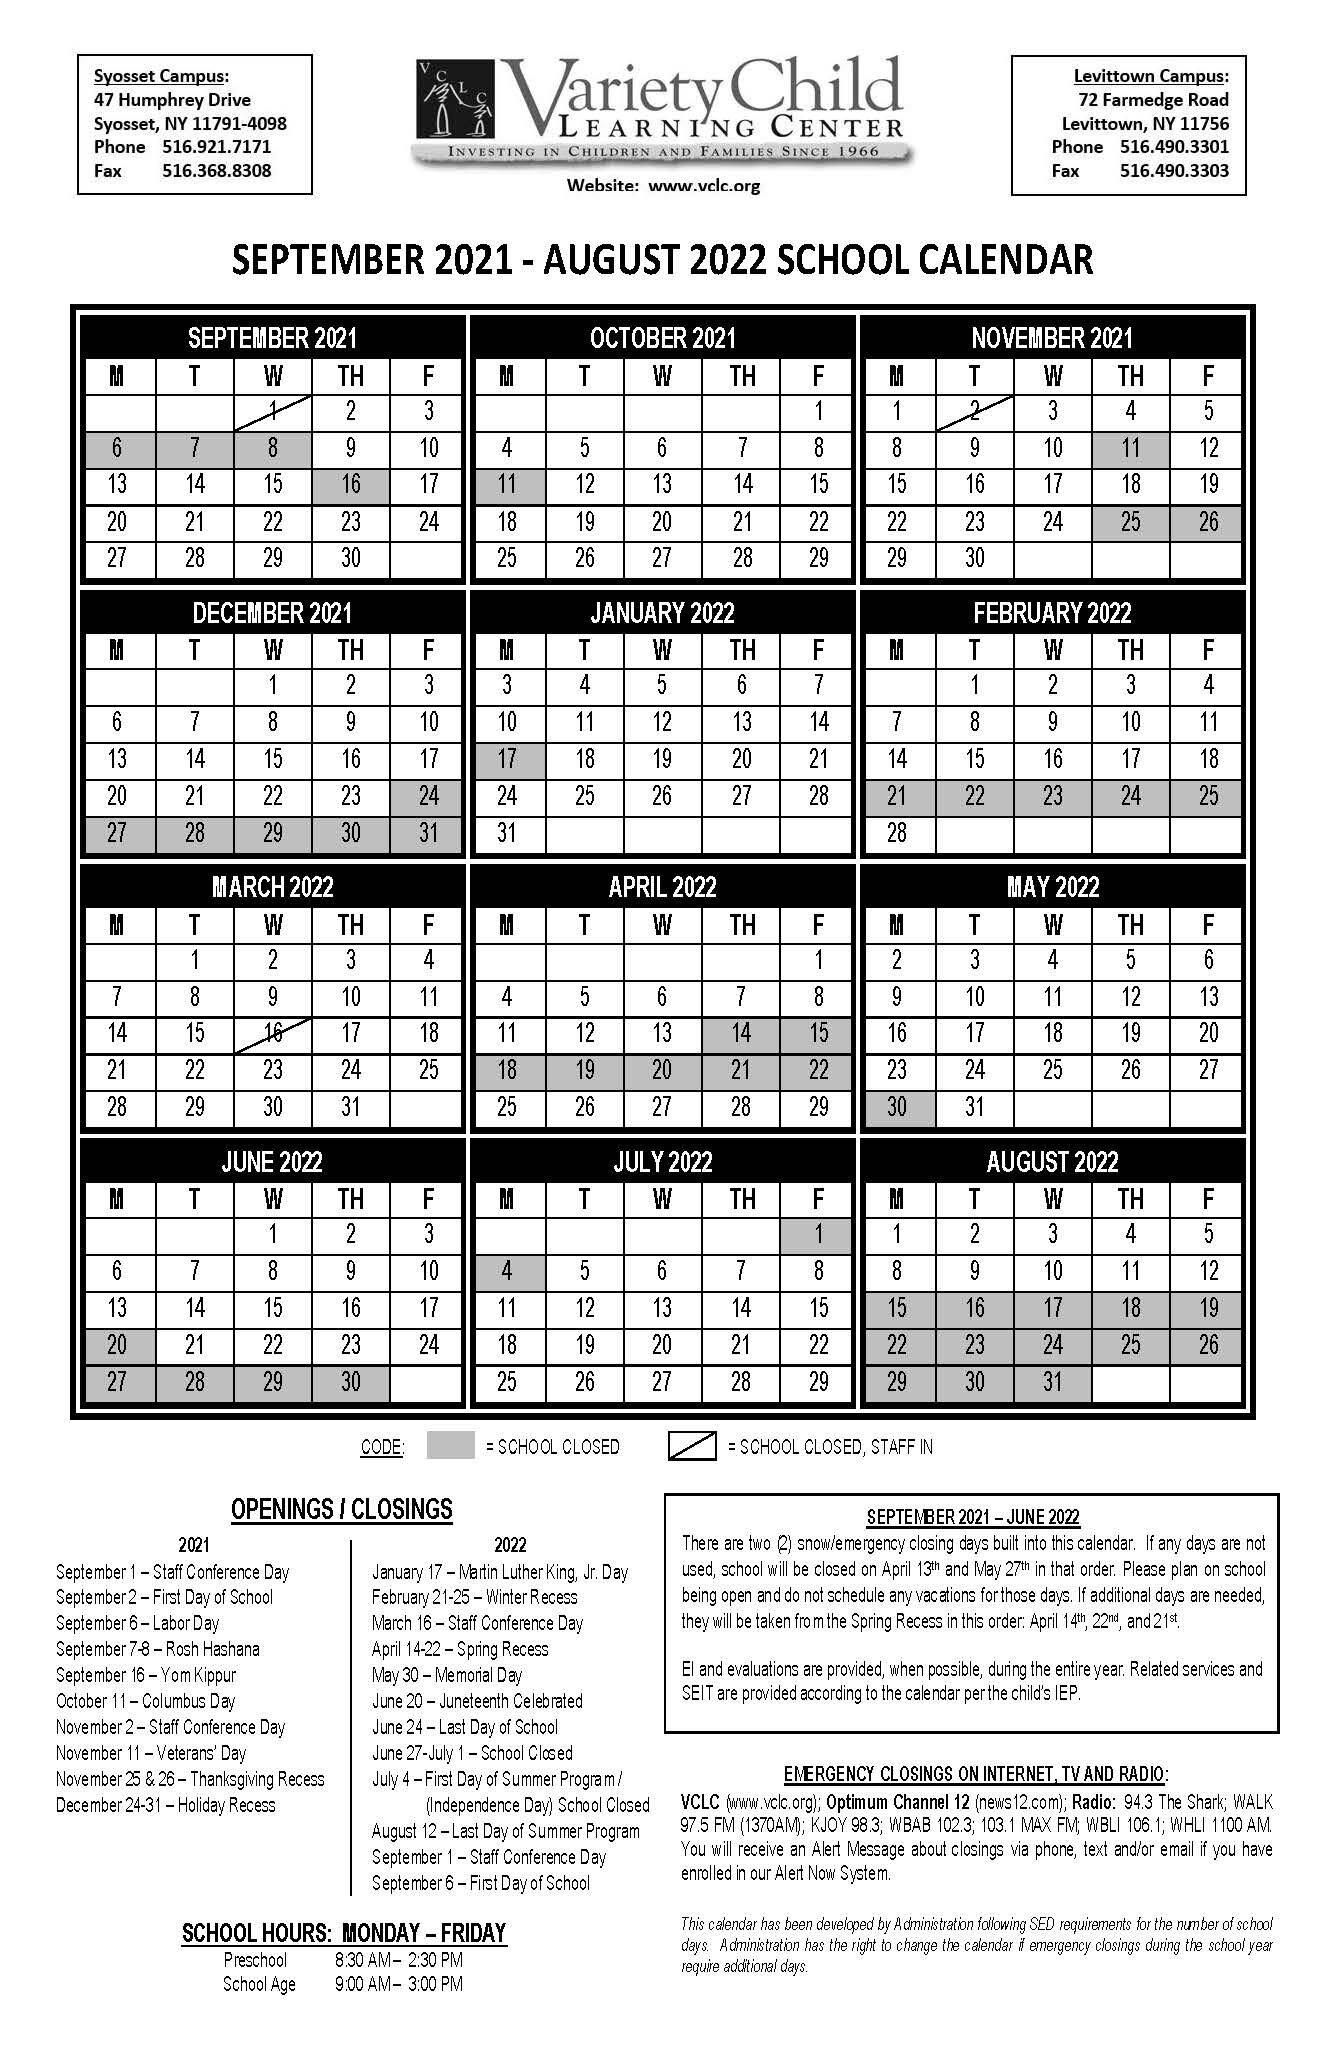 Njit Summer 2022 Calendar School Calendar — Variety Child Learning Center